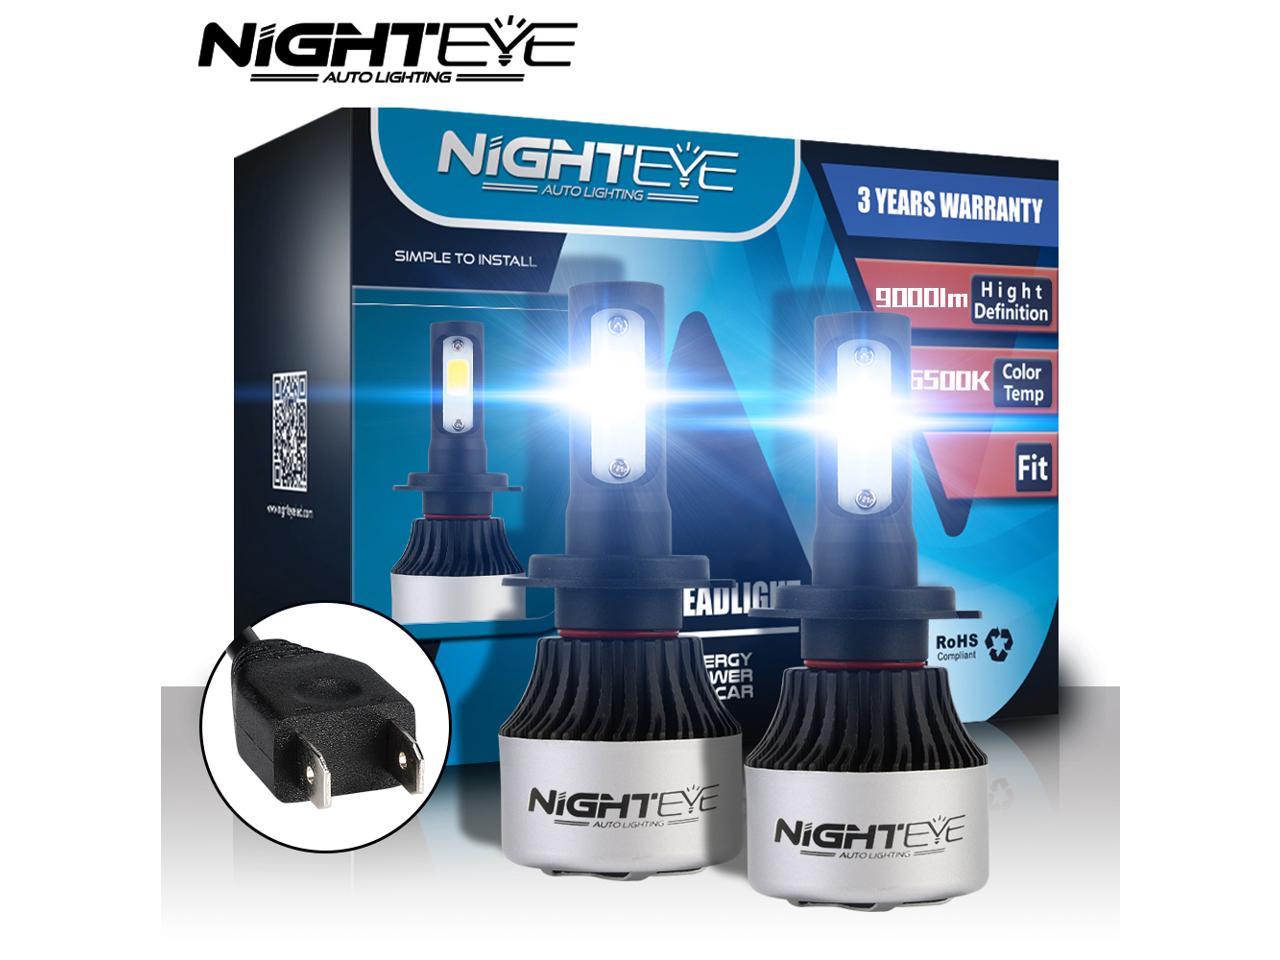 NIGHTEYE H4 72W 9000LM COB LED Auto Headlight Bulbs Kit 6500K White Replace HID